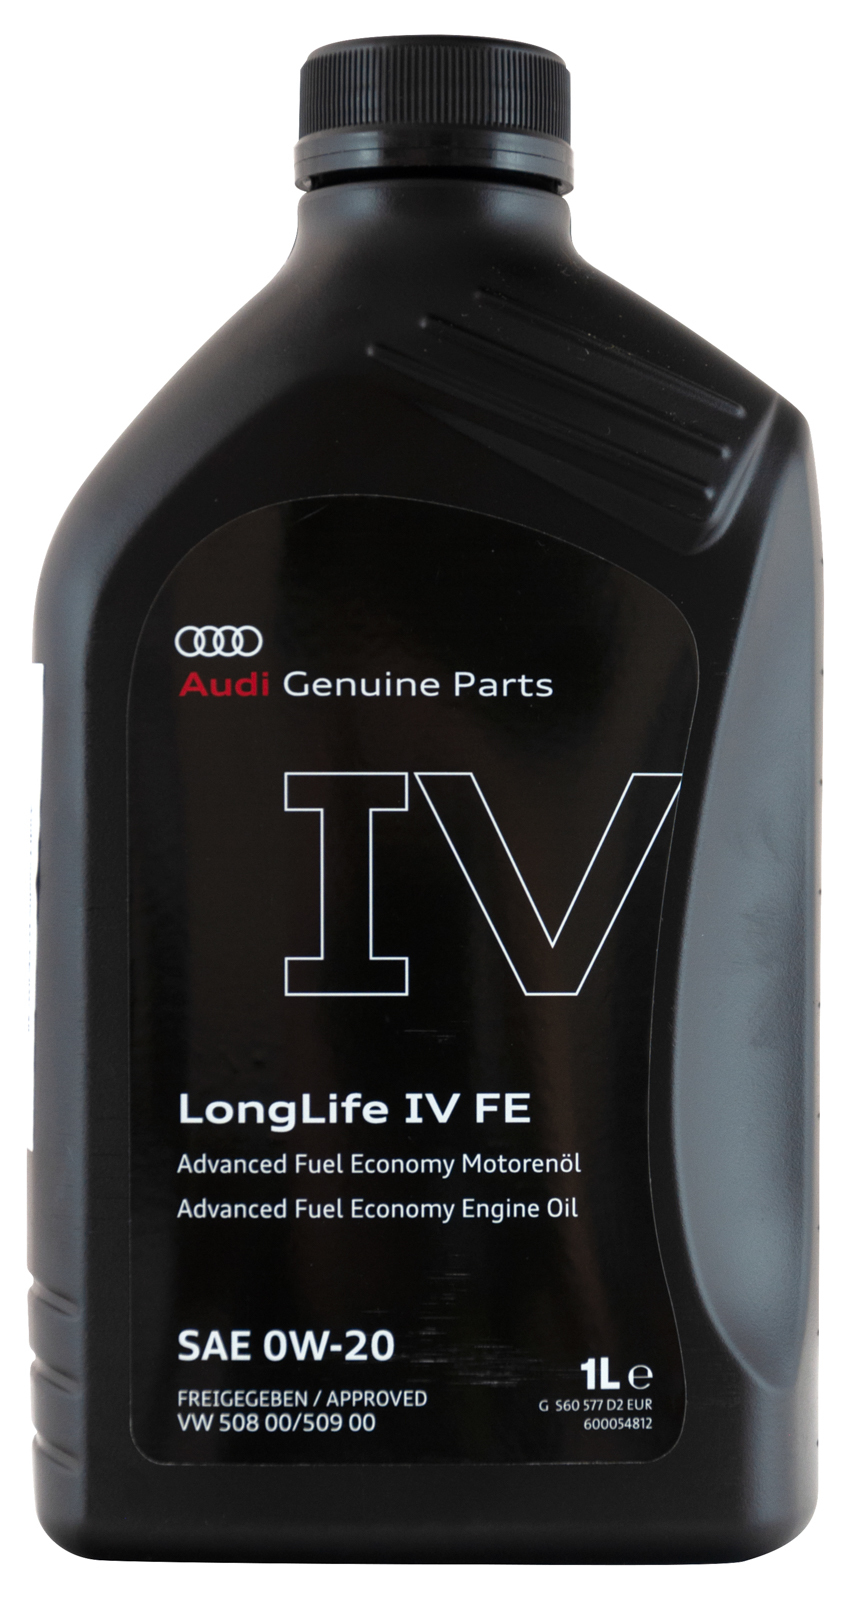 Купить масло VW Group VW Audi Longlife IV FE 0W-20, 1 литр, цена в Москве